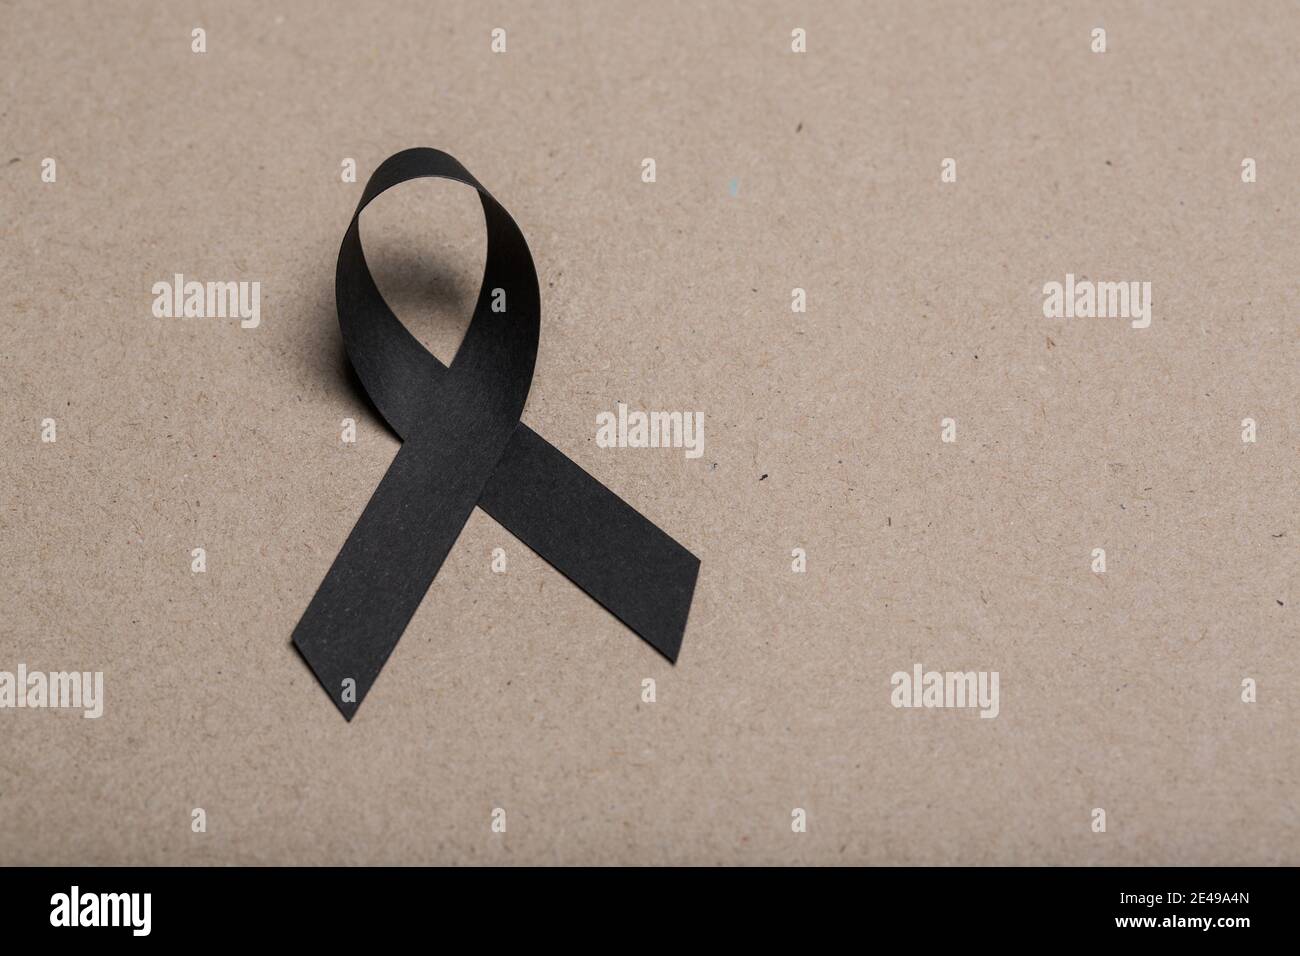 Black handmade awareness paper ribbon on cardboard background. Stock Photo